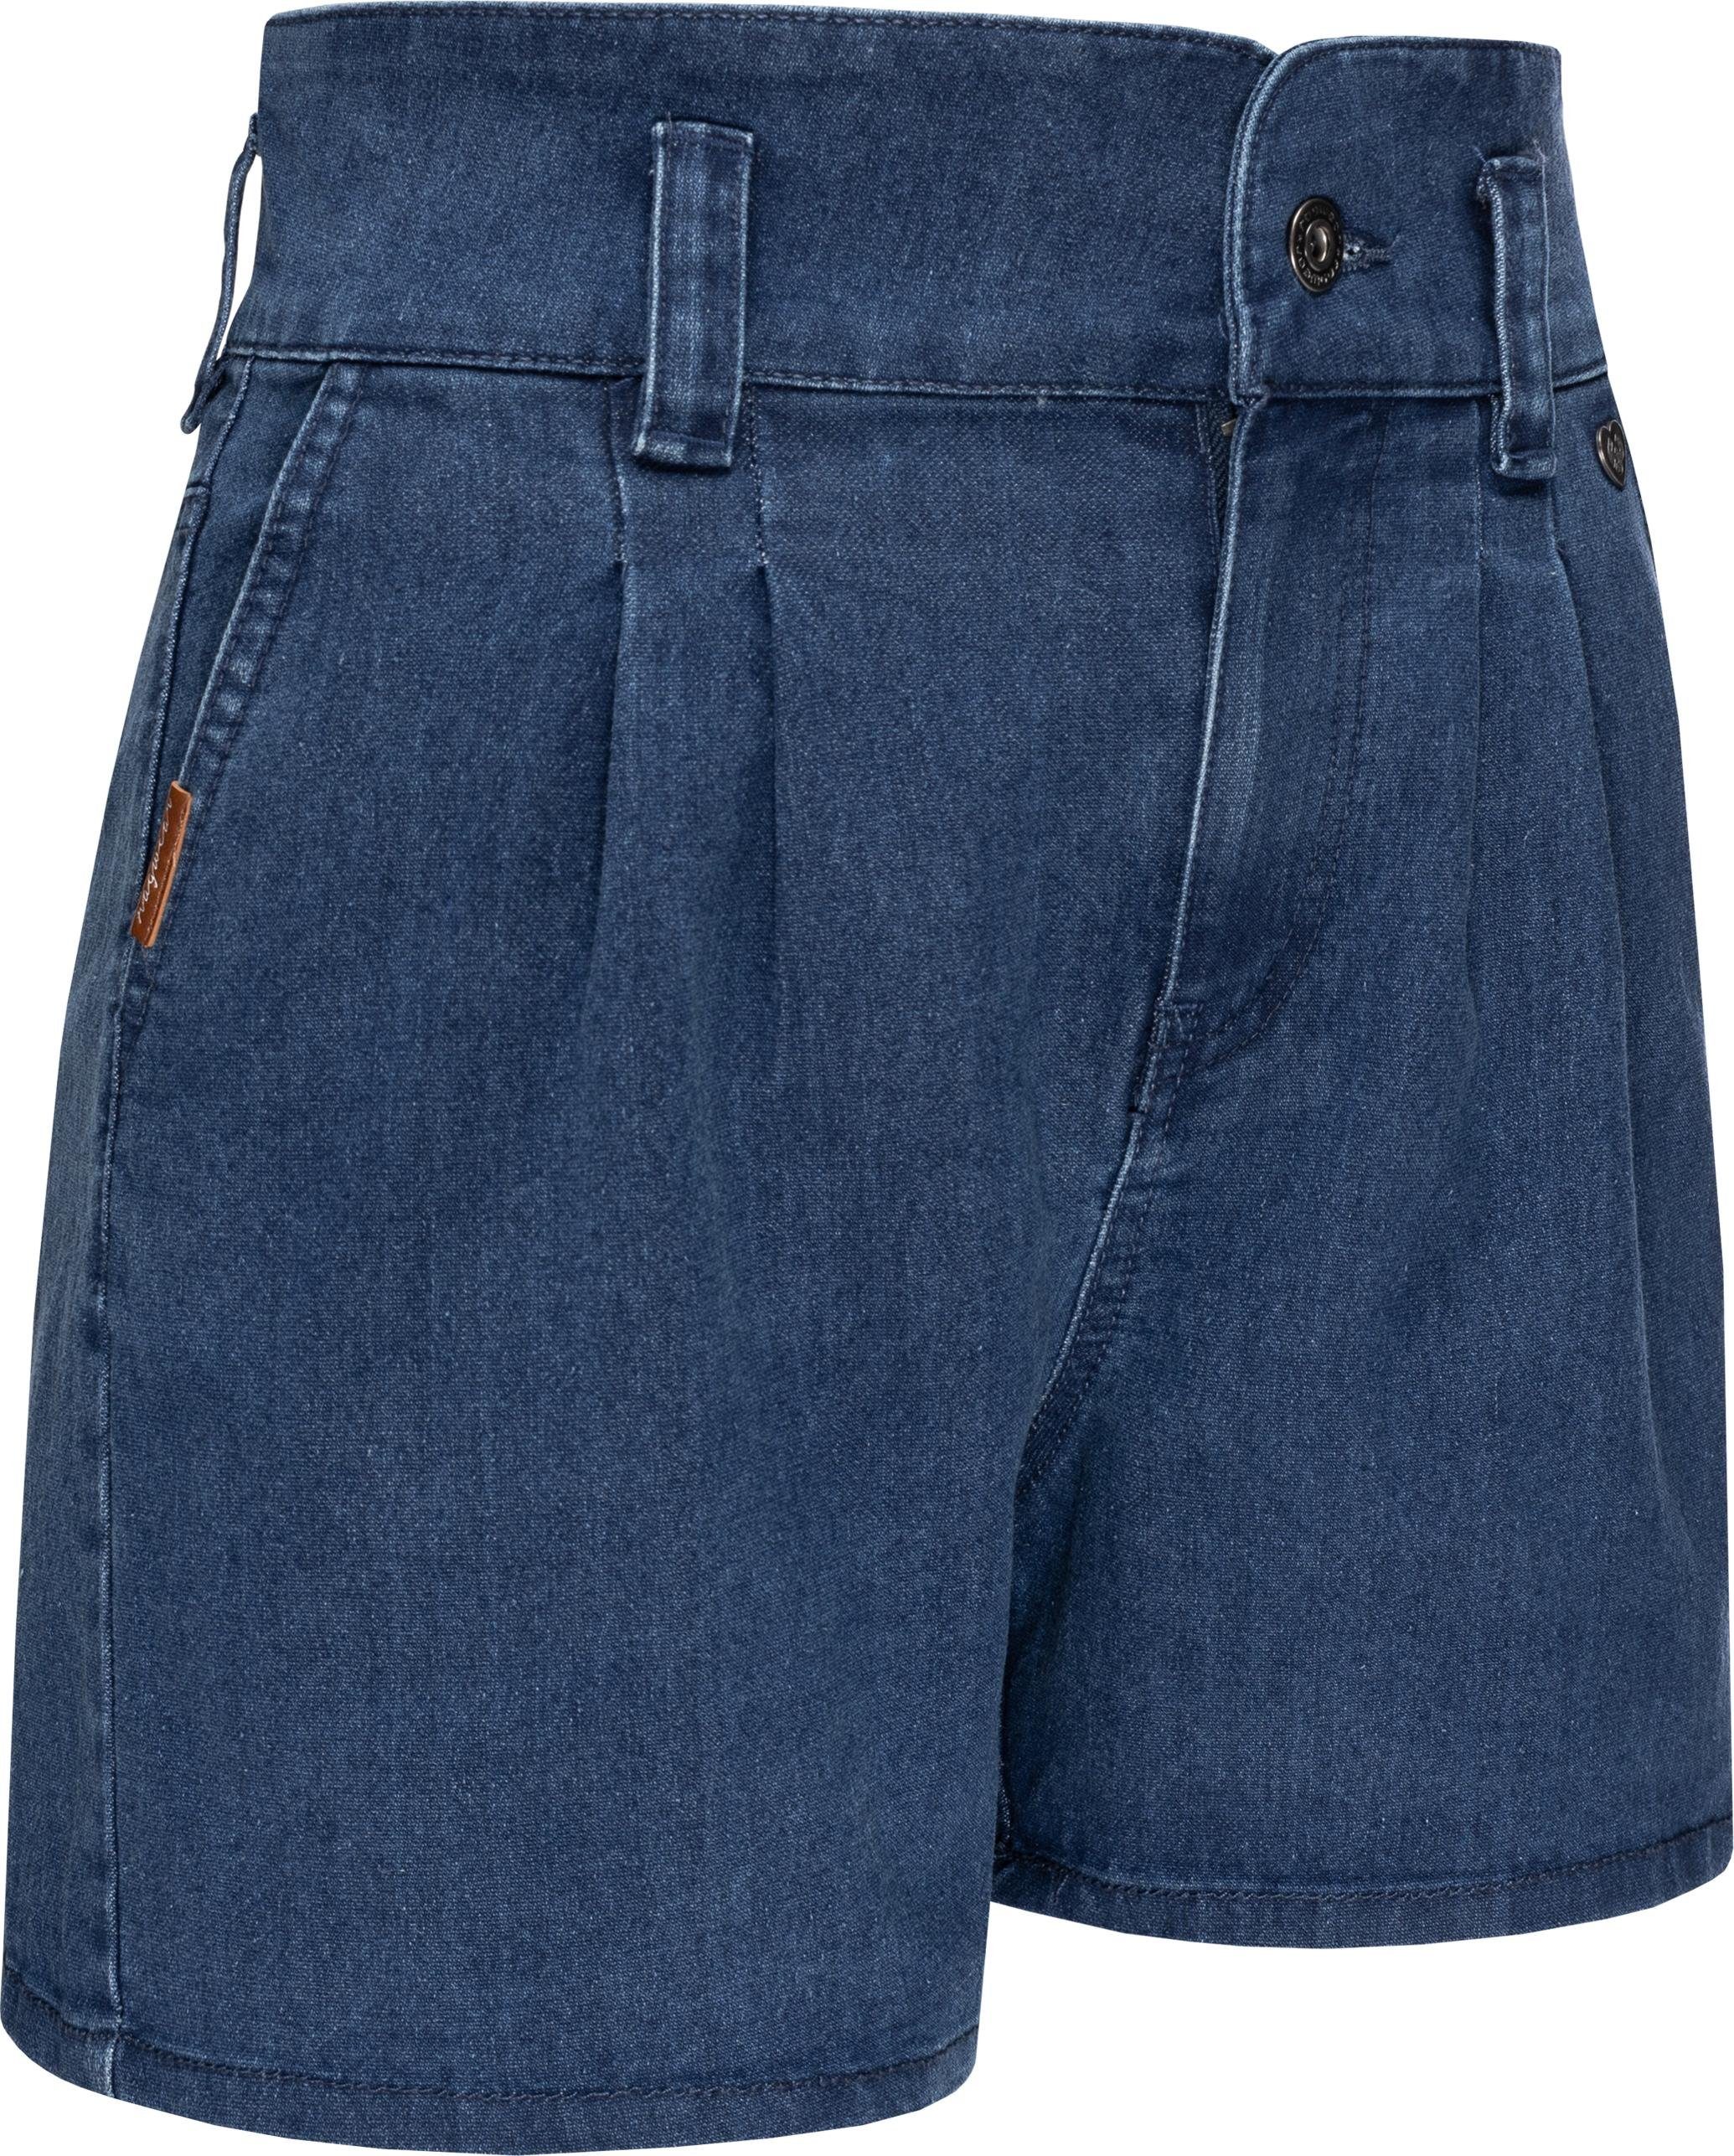 Ragwear Shorts Suzzie stylische, Sommerhose Jeansoptik in kurze indigo